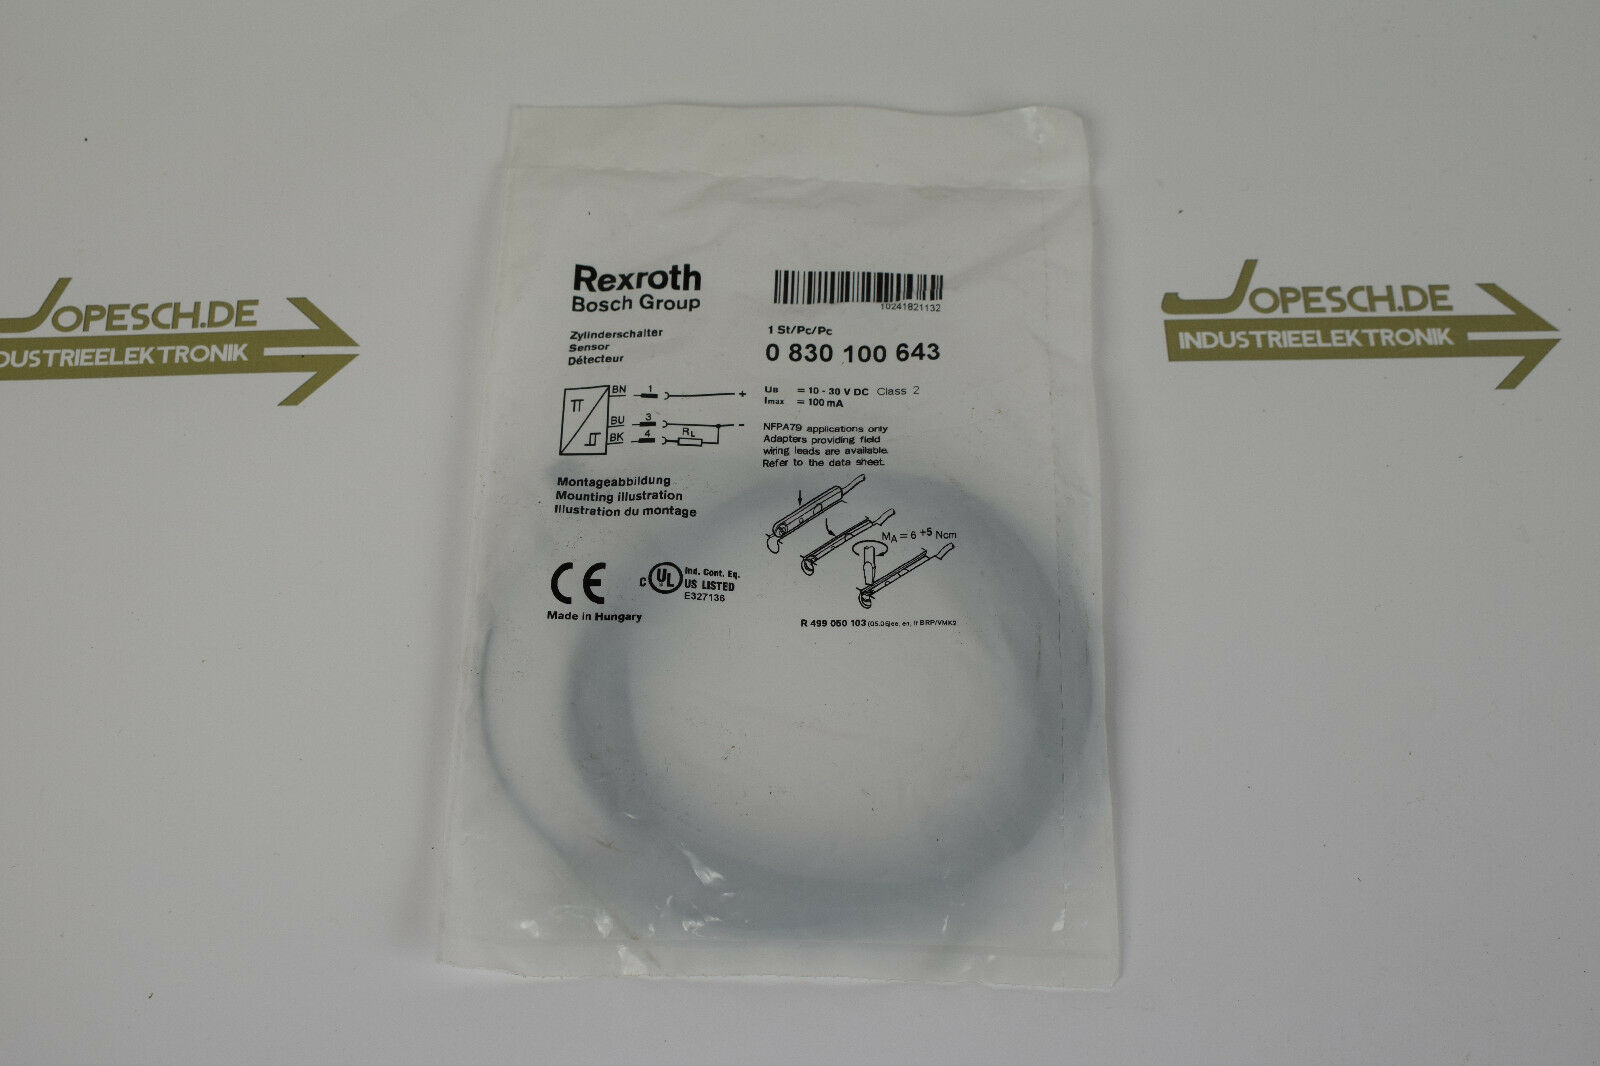 Rexroth Bosch Group Zylinderschalter 0 830 100 643 